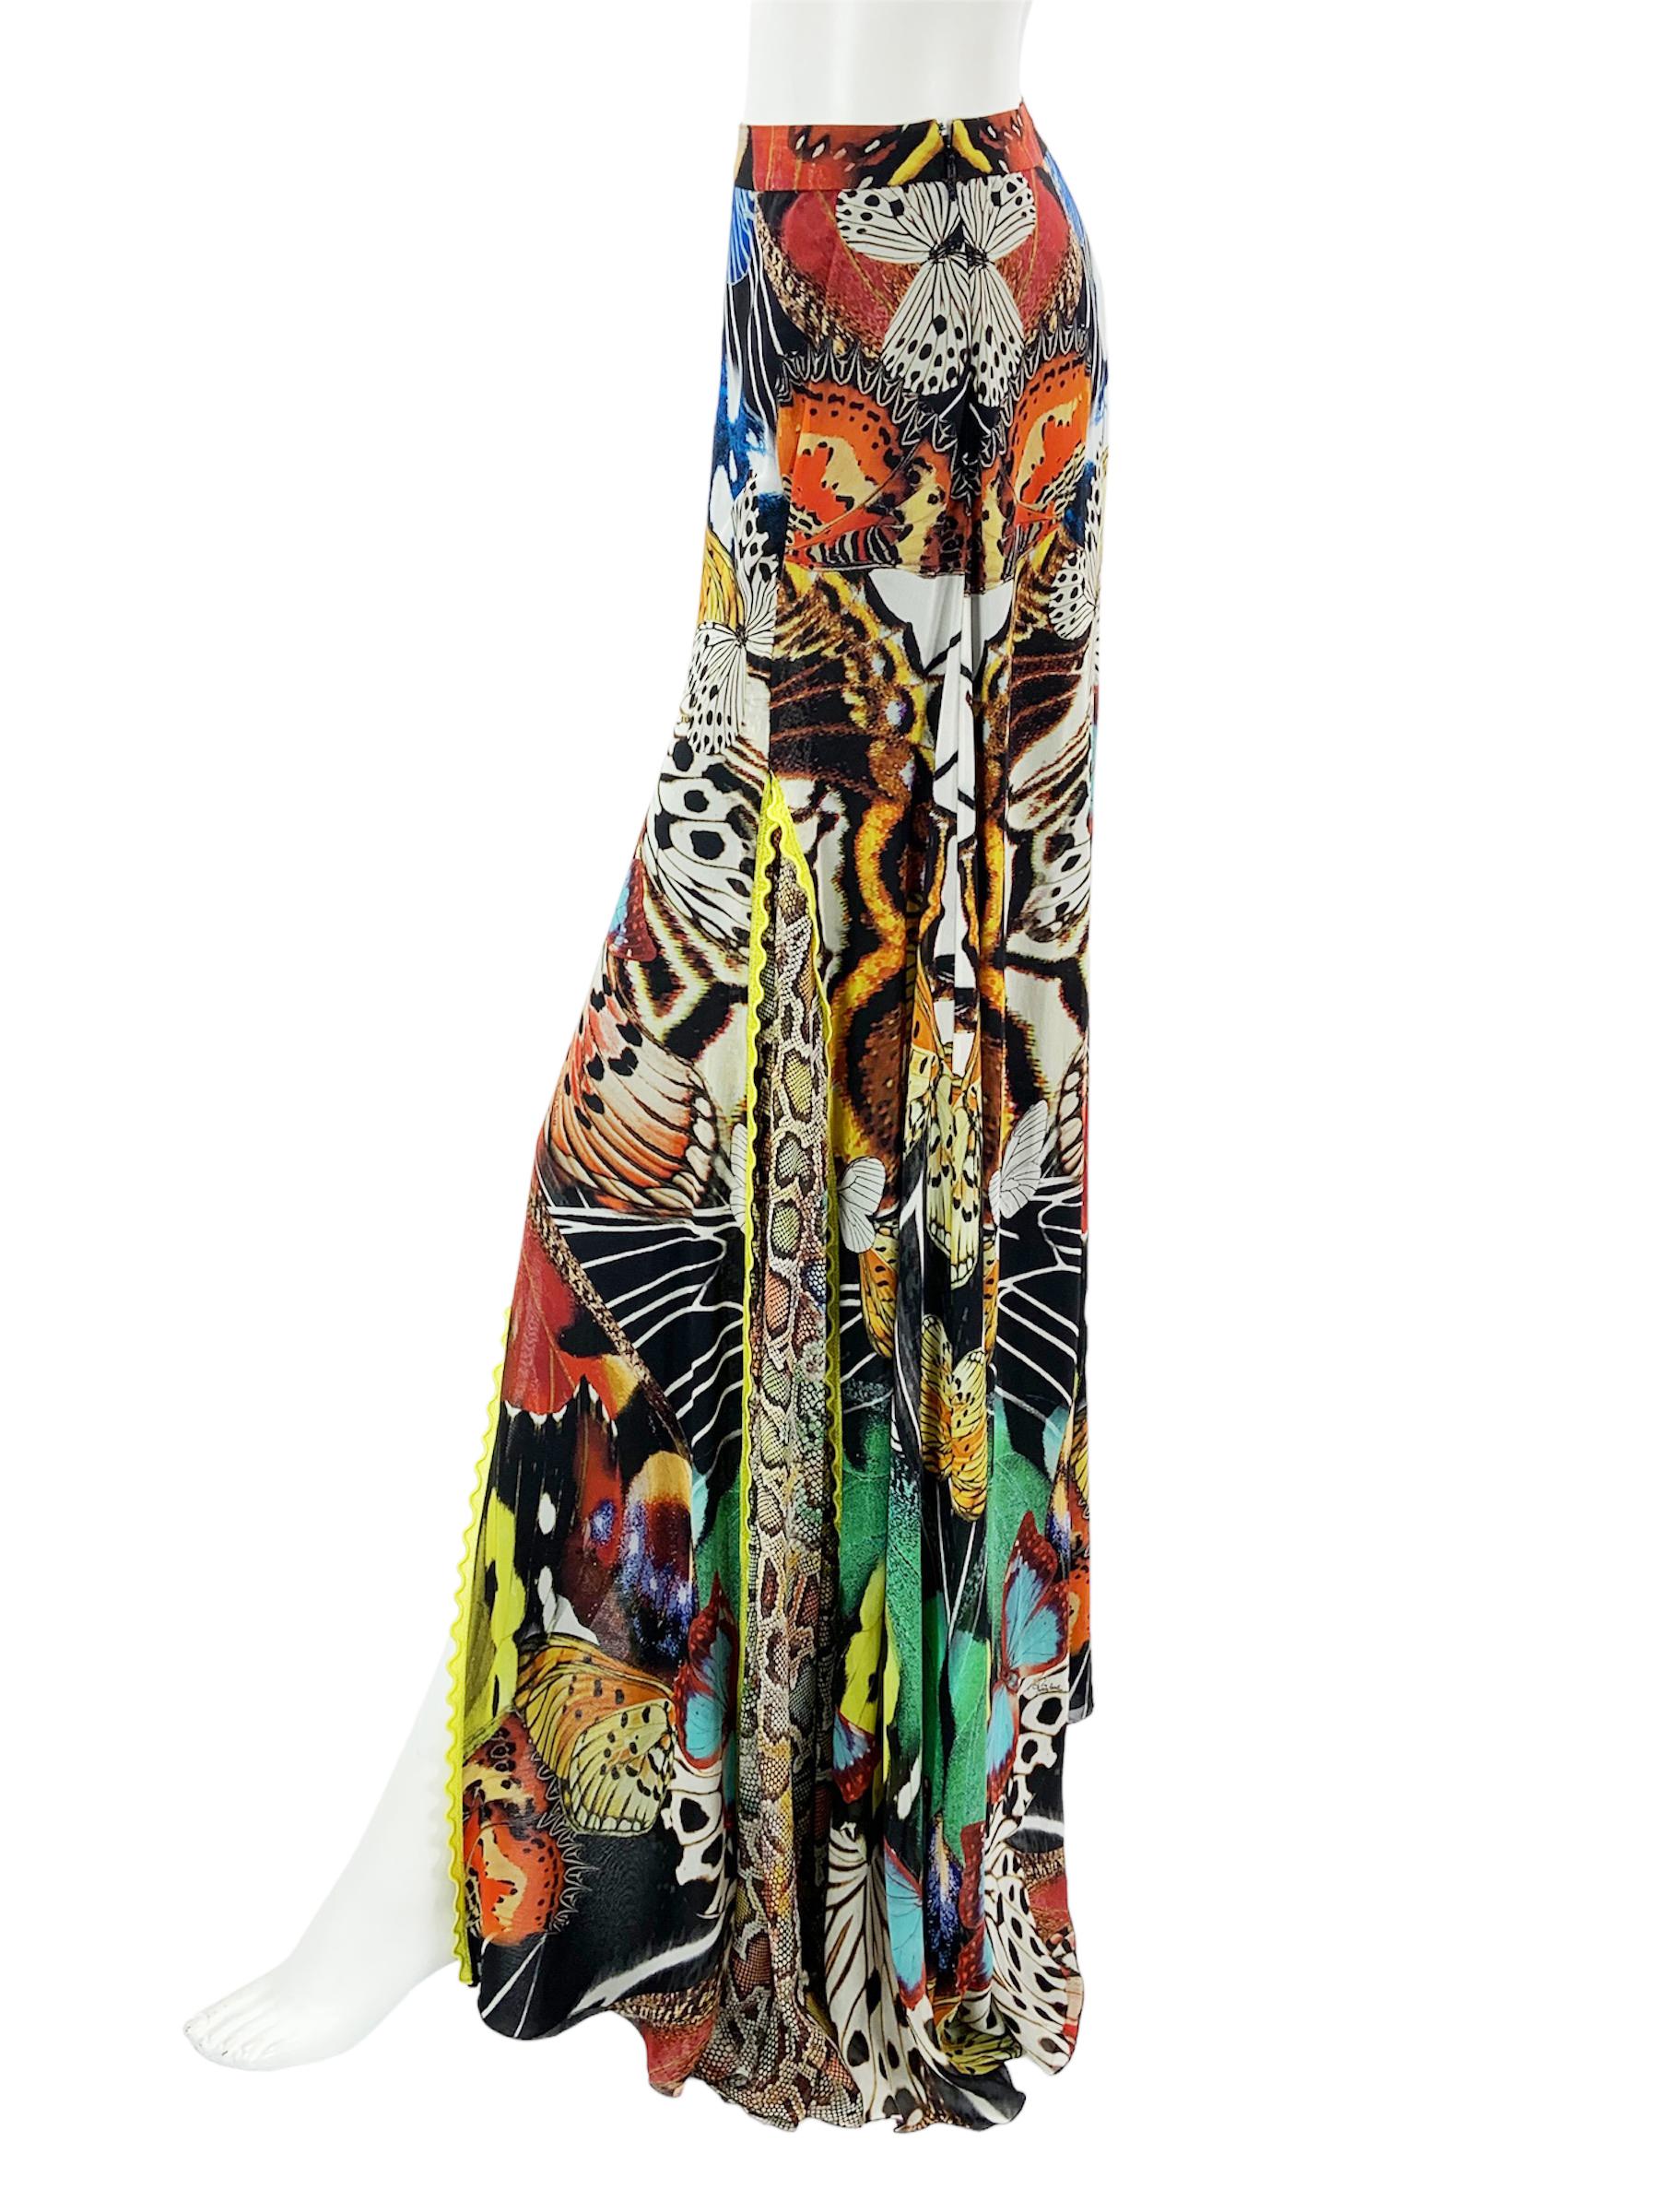 New Roberto Cavalli Butterfly Print Silk Maxi Skirt Italian size 40 For Sale 1